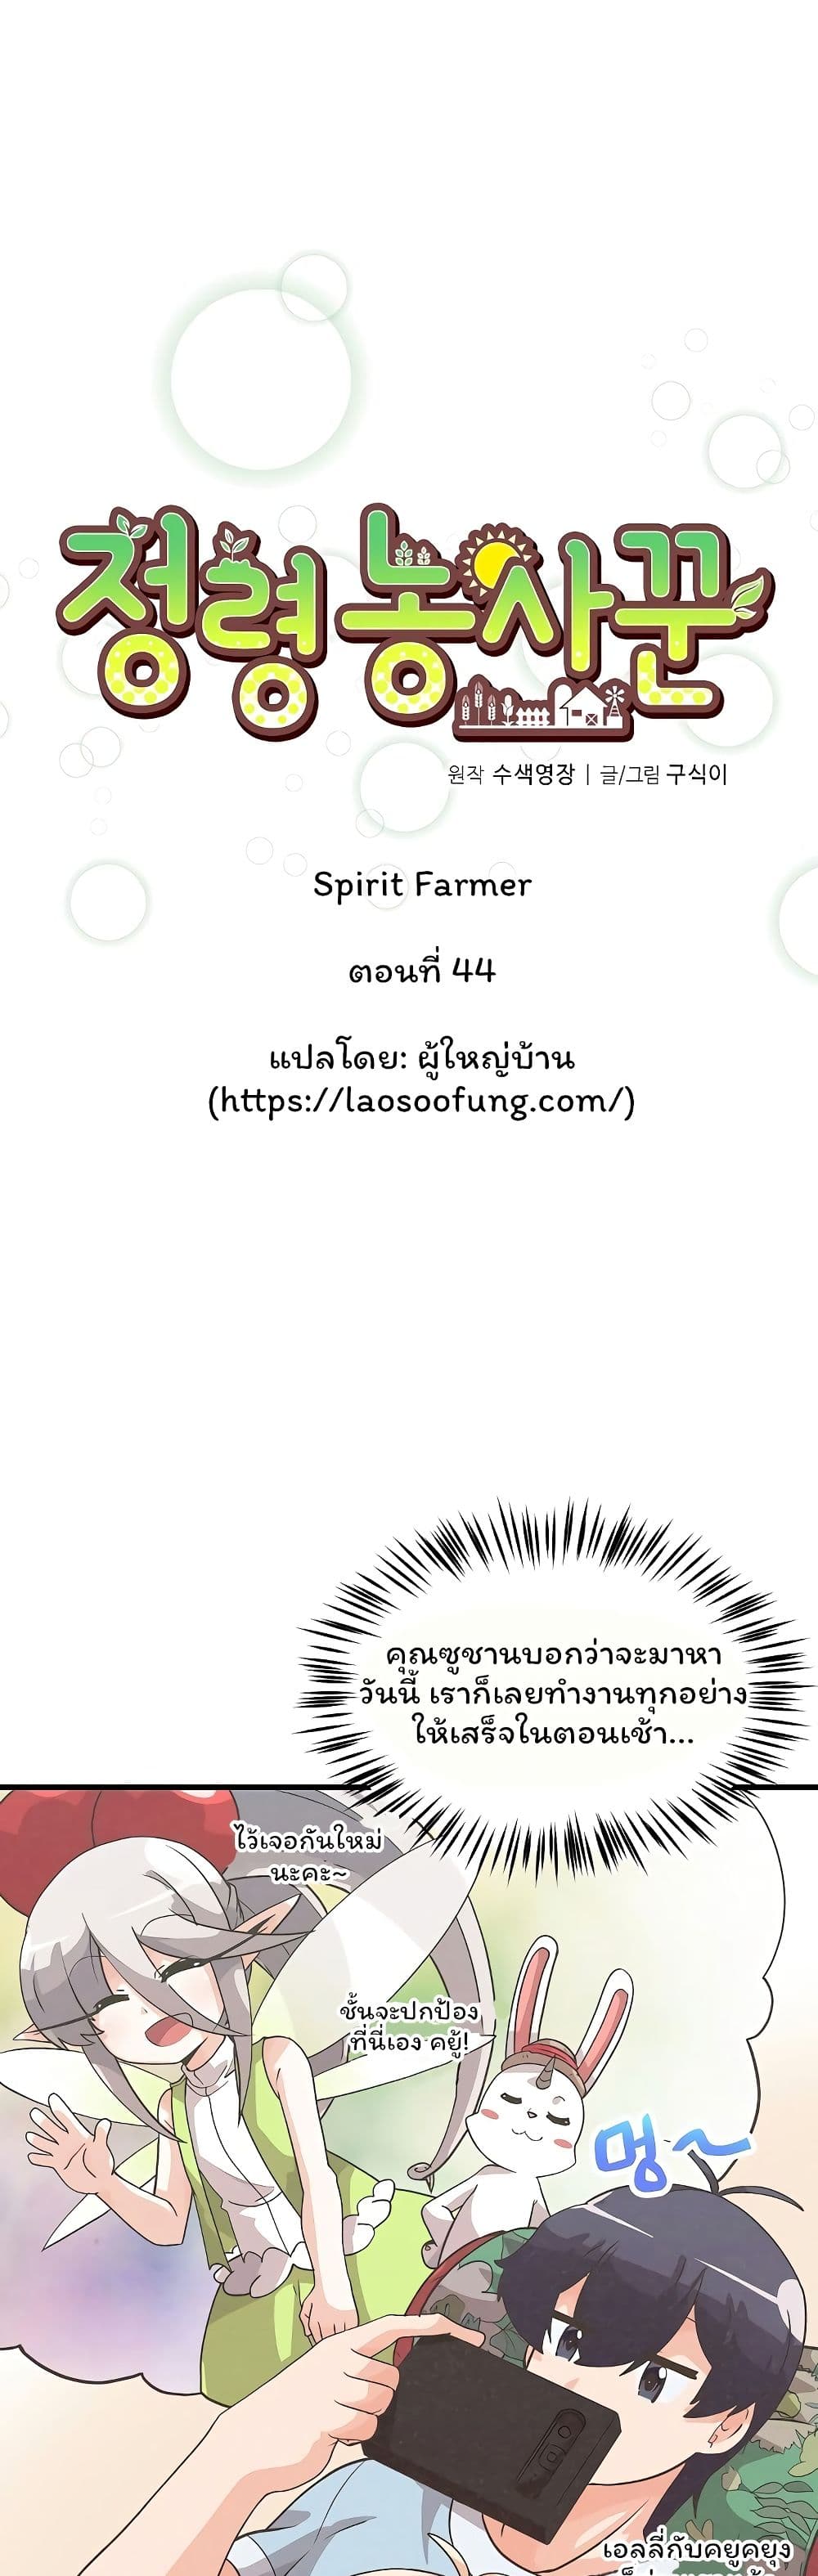 Spirit Farmer 44-44